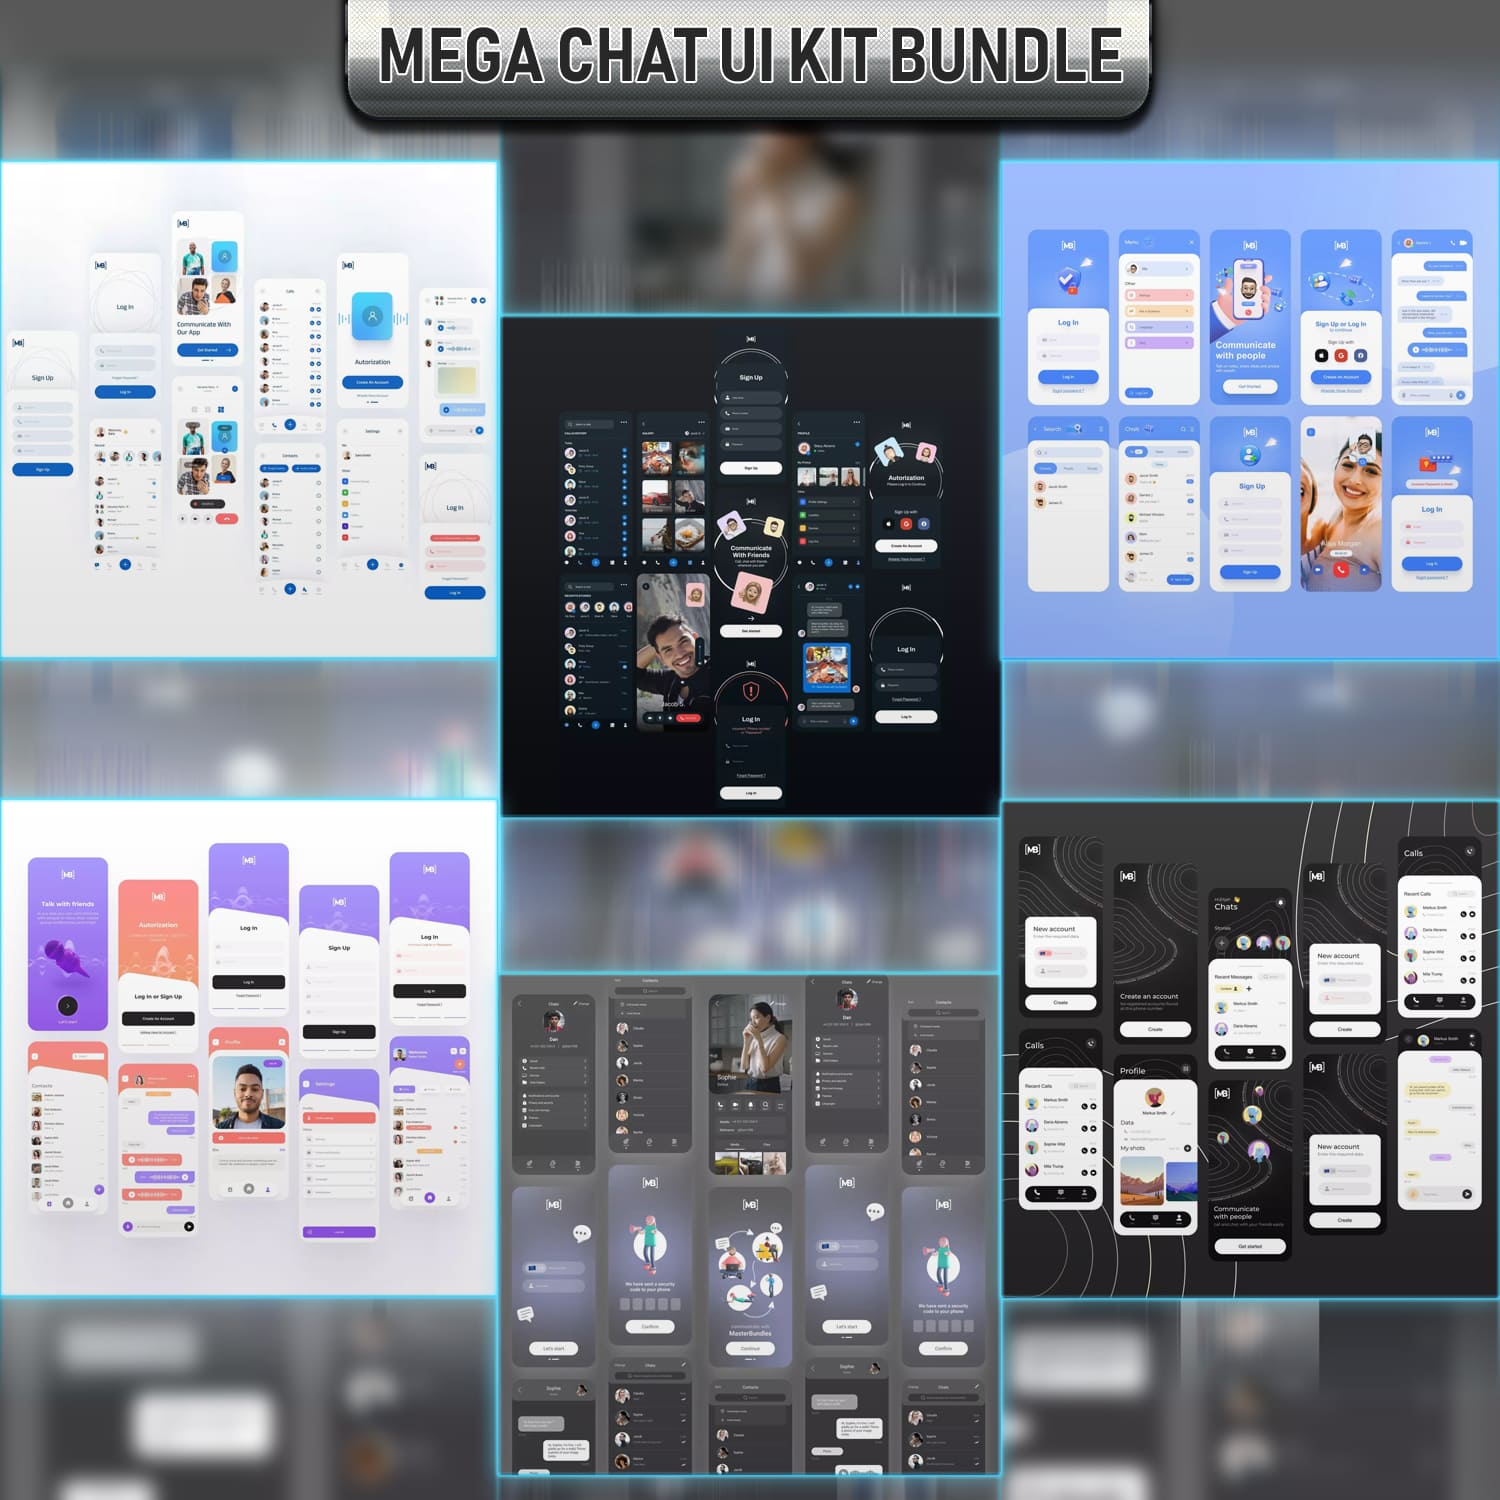 Mega Chat UI Kit Bundle cover image.